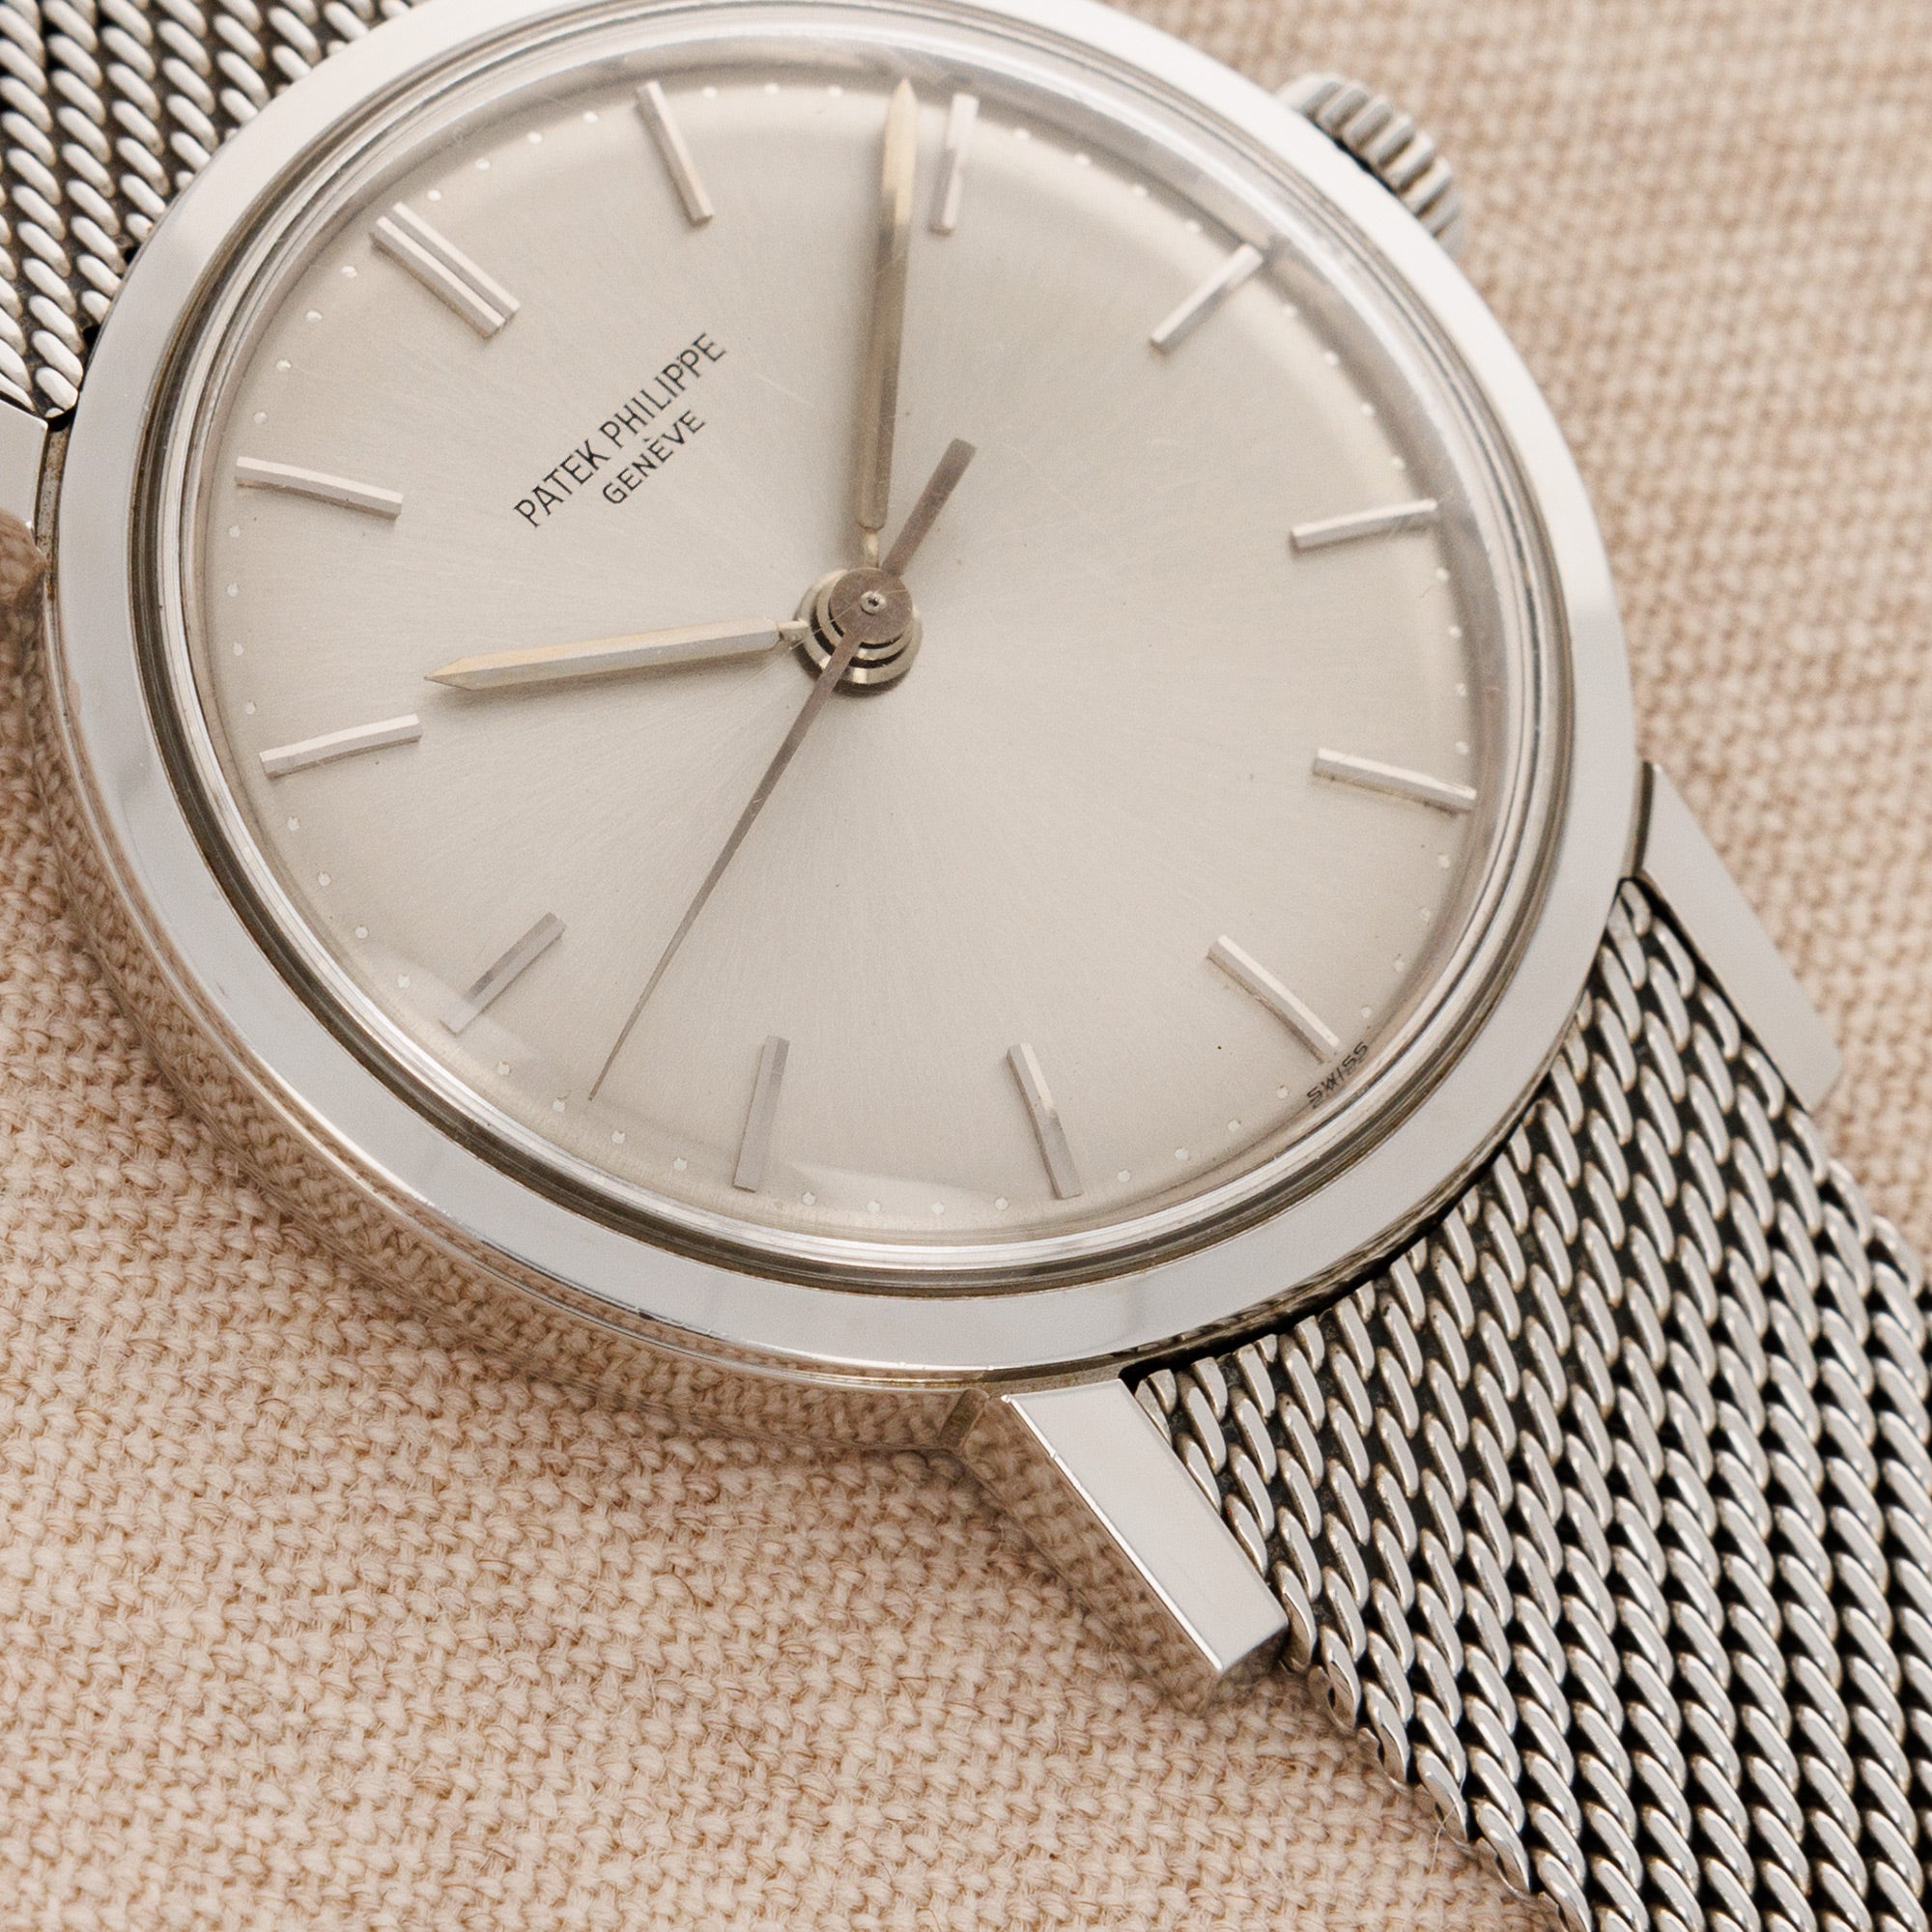 Patek Philippe - Patek Philippe Steel Calatrava Watch Ref. 3483 - The Keystone Watches